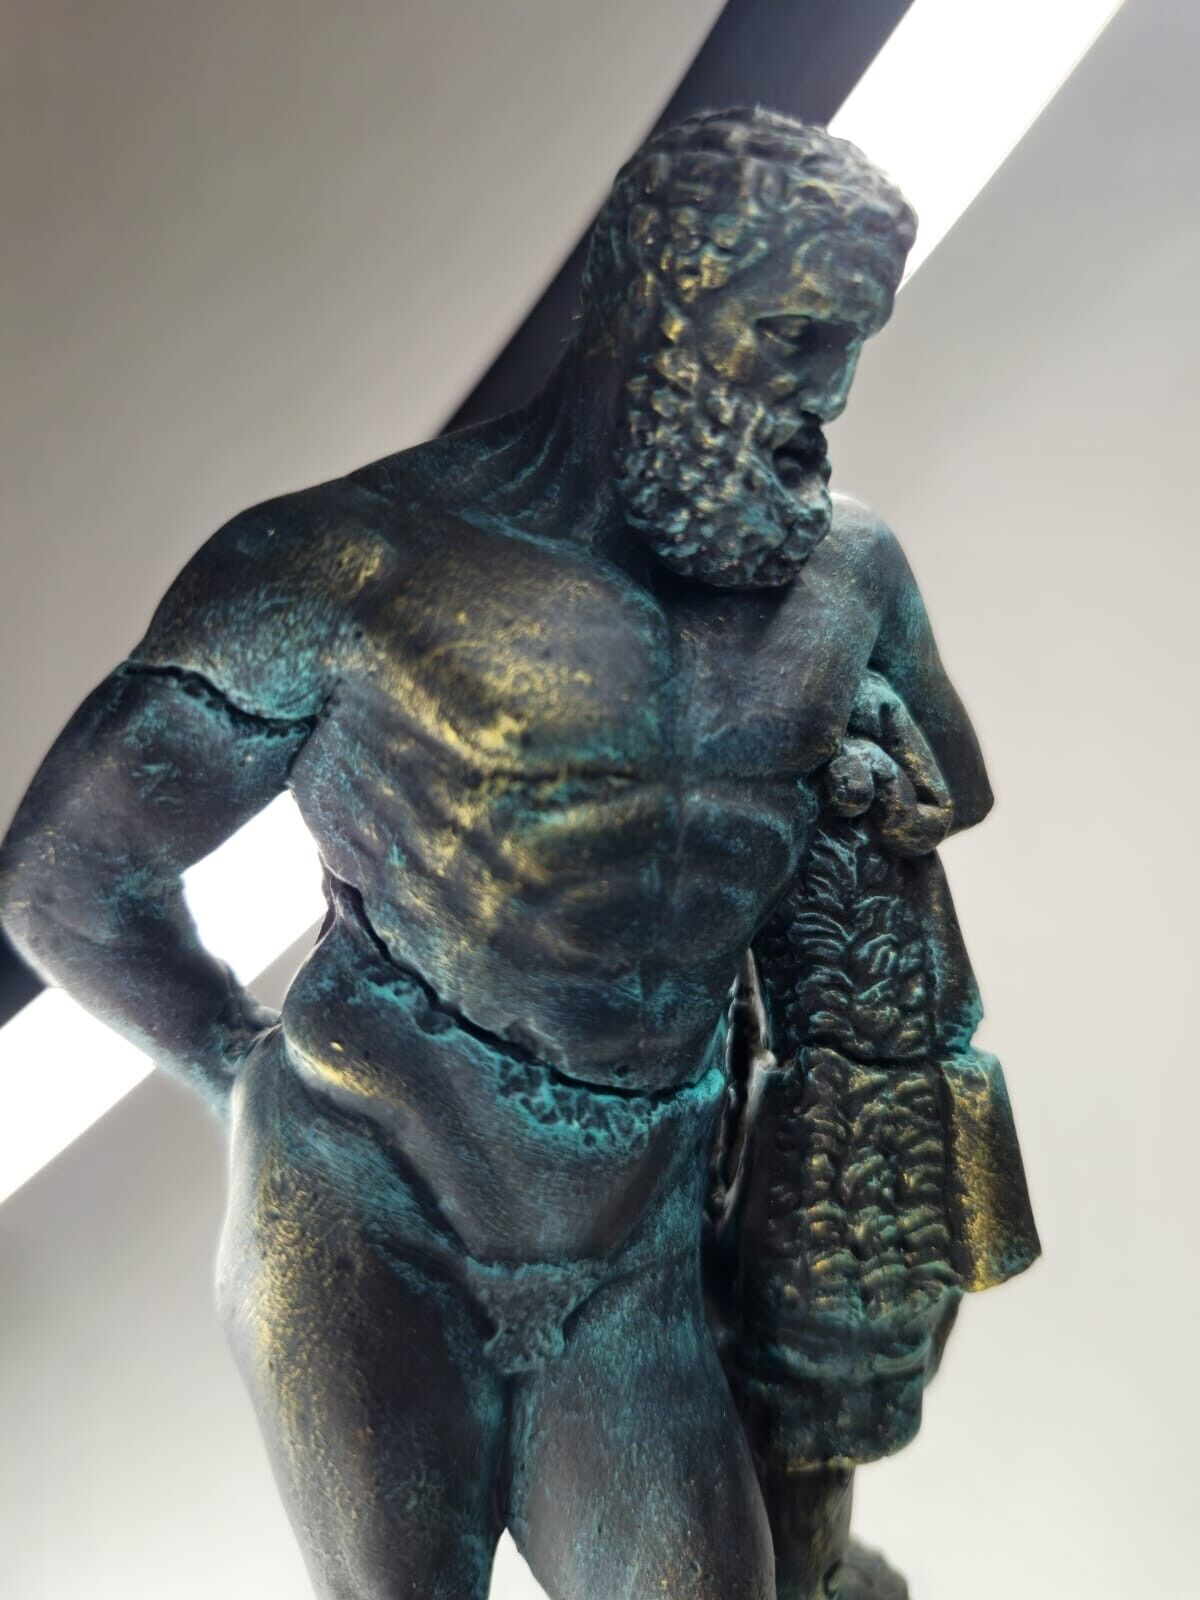 Farnese Hercules Sculpture, Heracles Bust, Greek Statue, Ancient Greek Gods